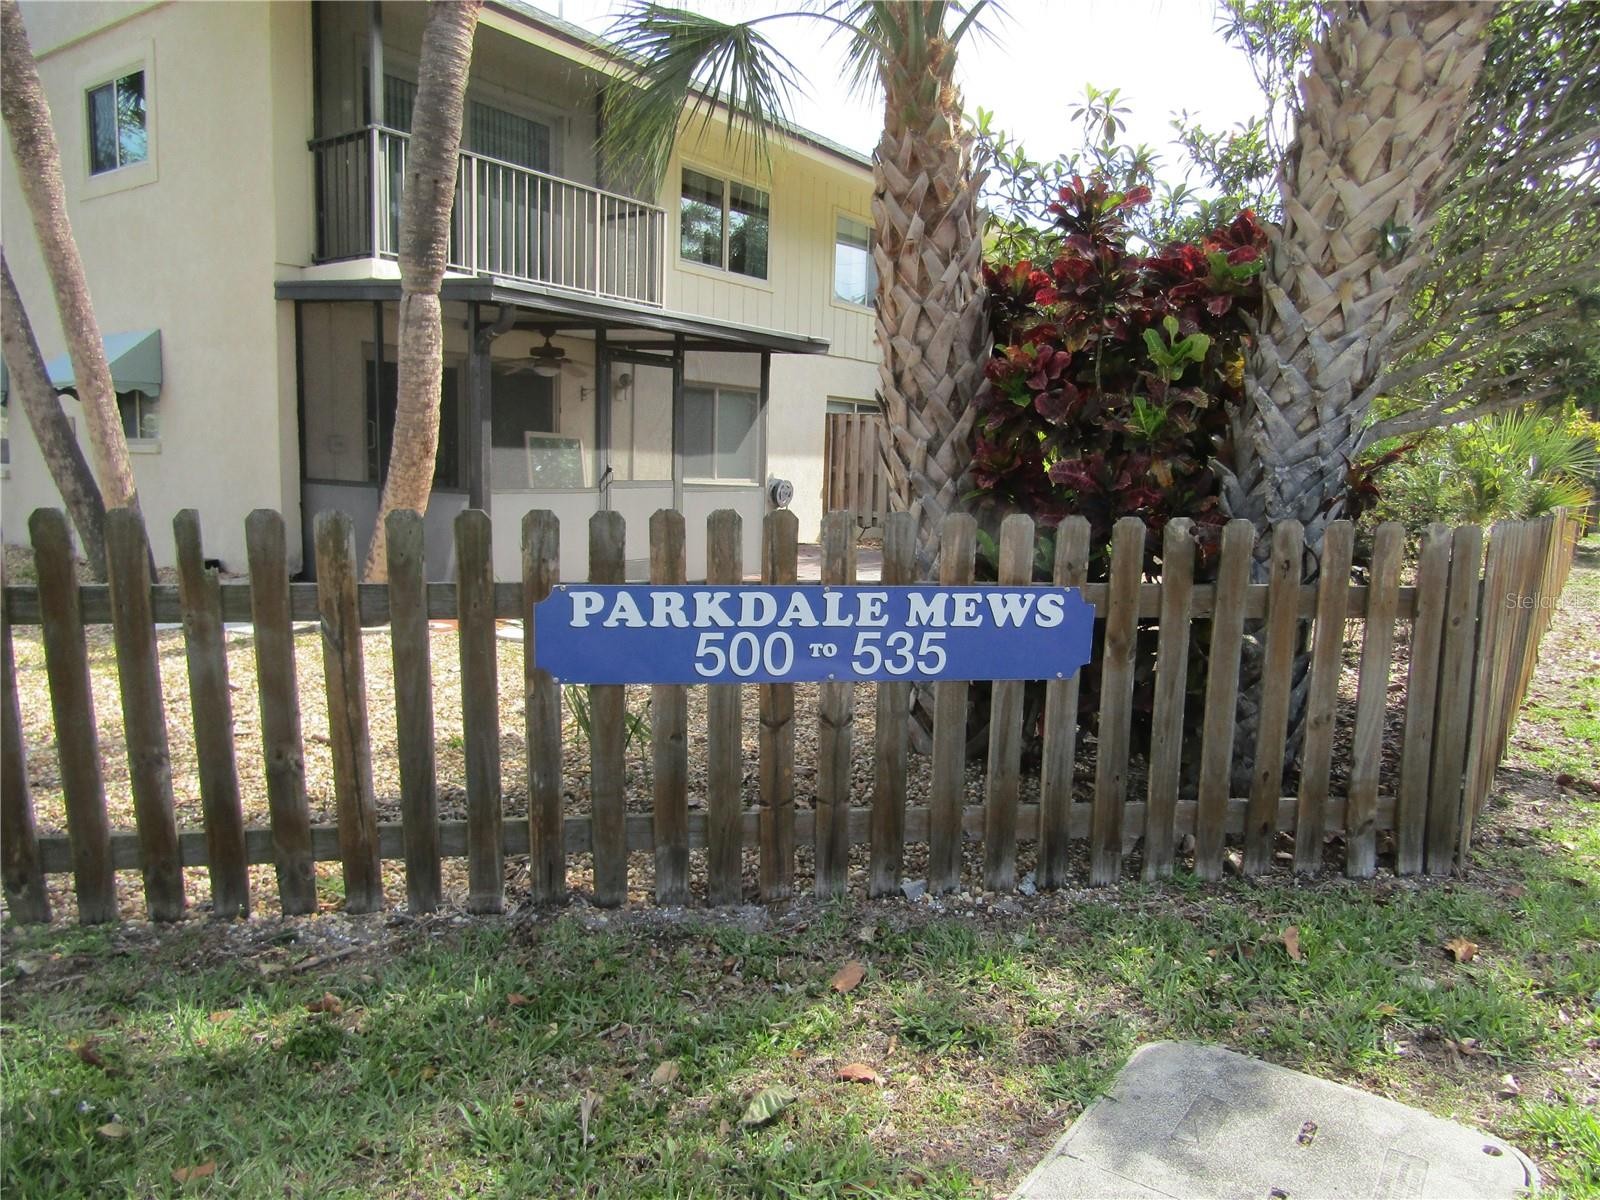 509 Parkdale Mews #509 Venice Florida 34285